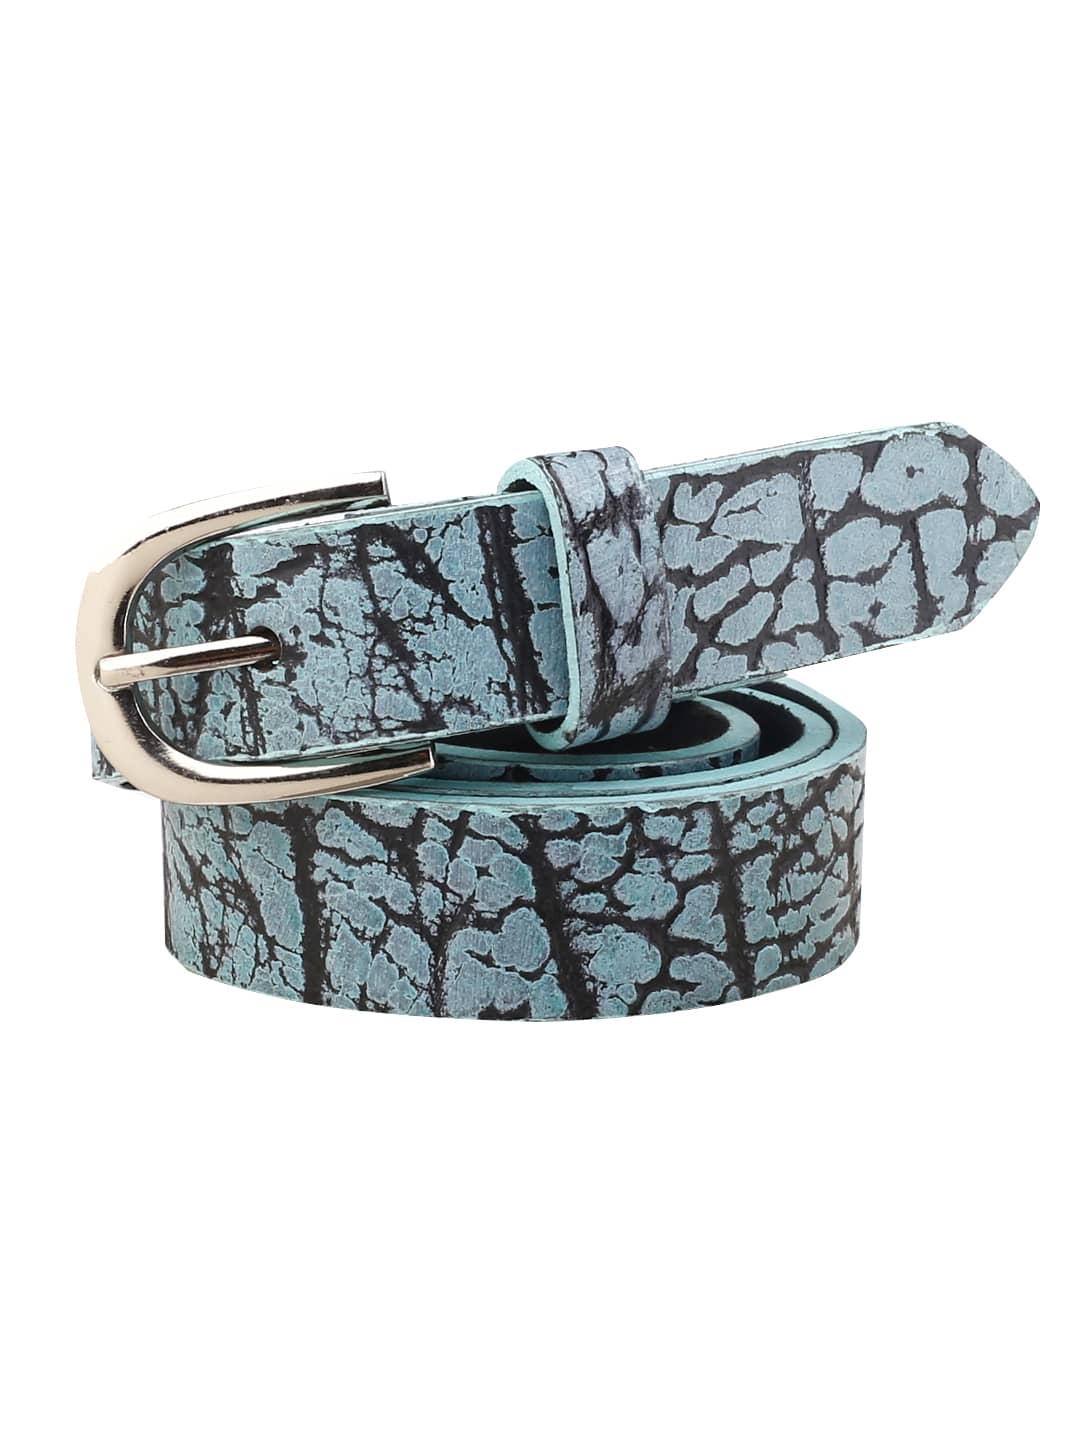 Bacca Bucci Azure Serpentine 22mm Textured Fashion Belt for Women, Genuine Leather